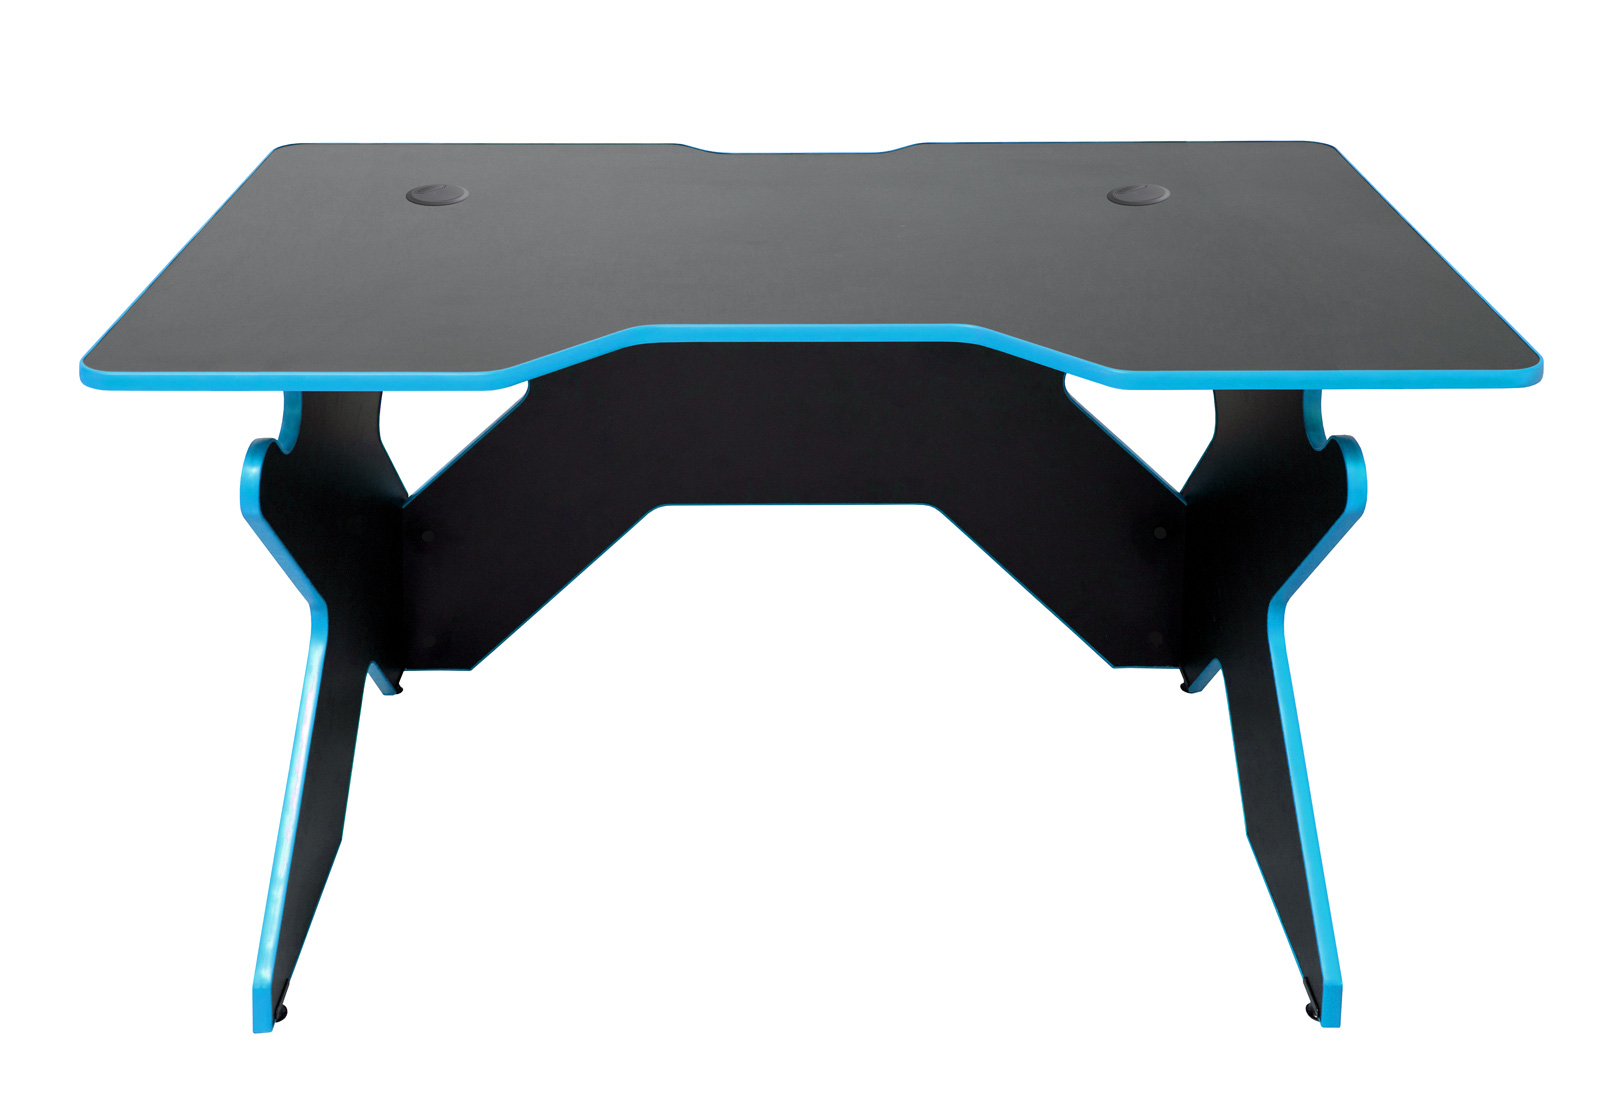 Игровой компьютерный стол vmmgame space dark blue st-1bbe